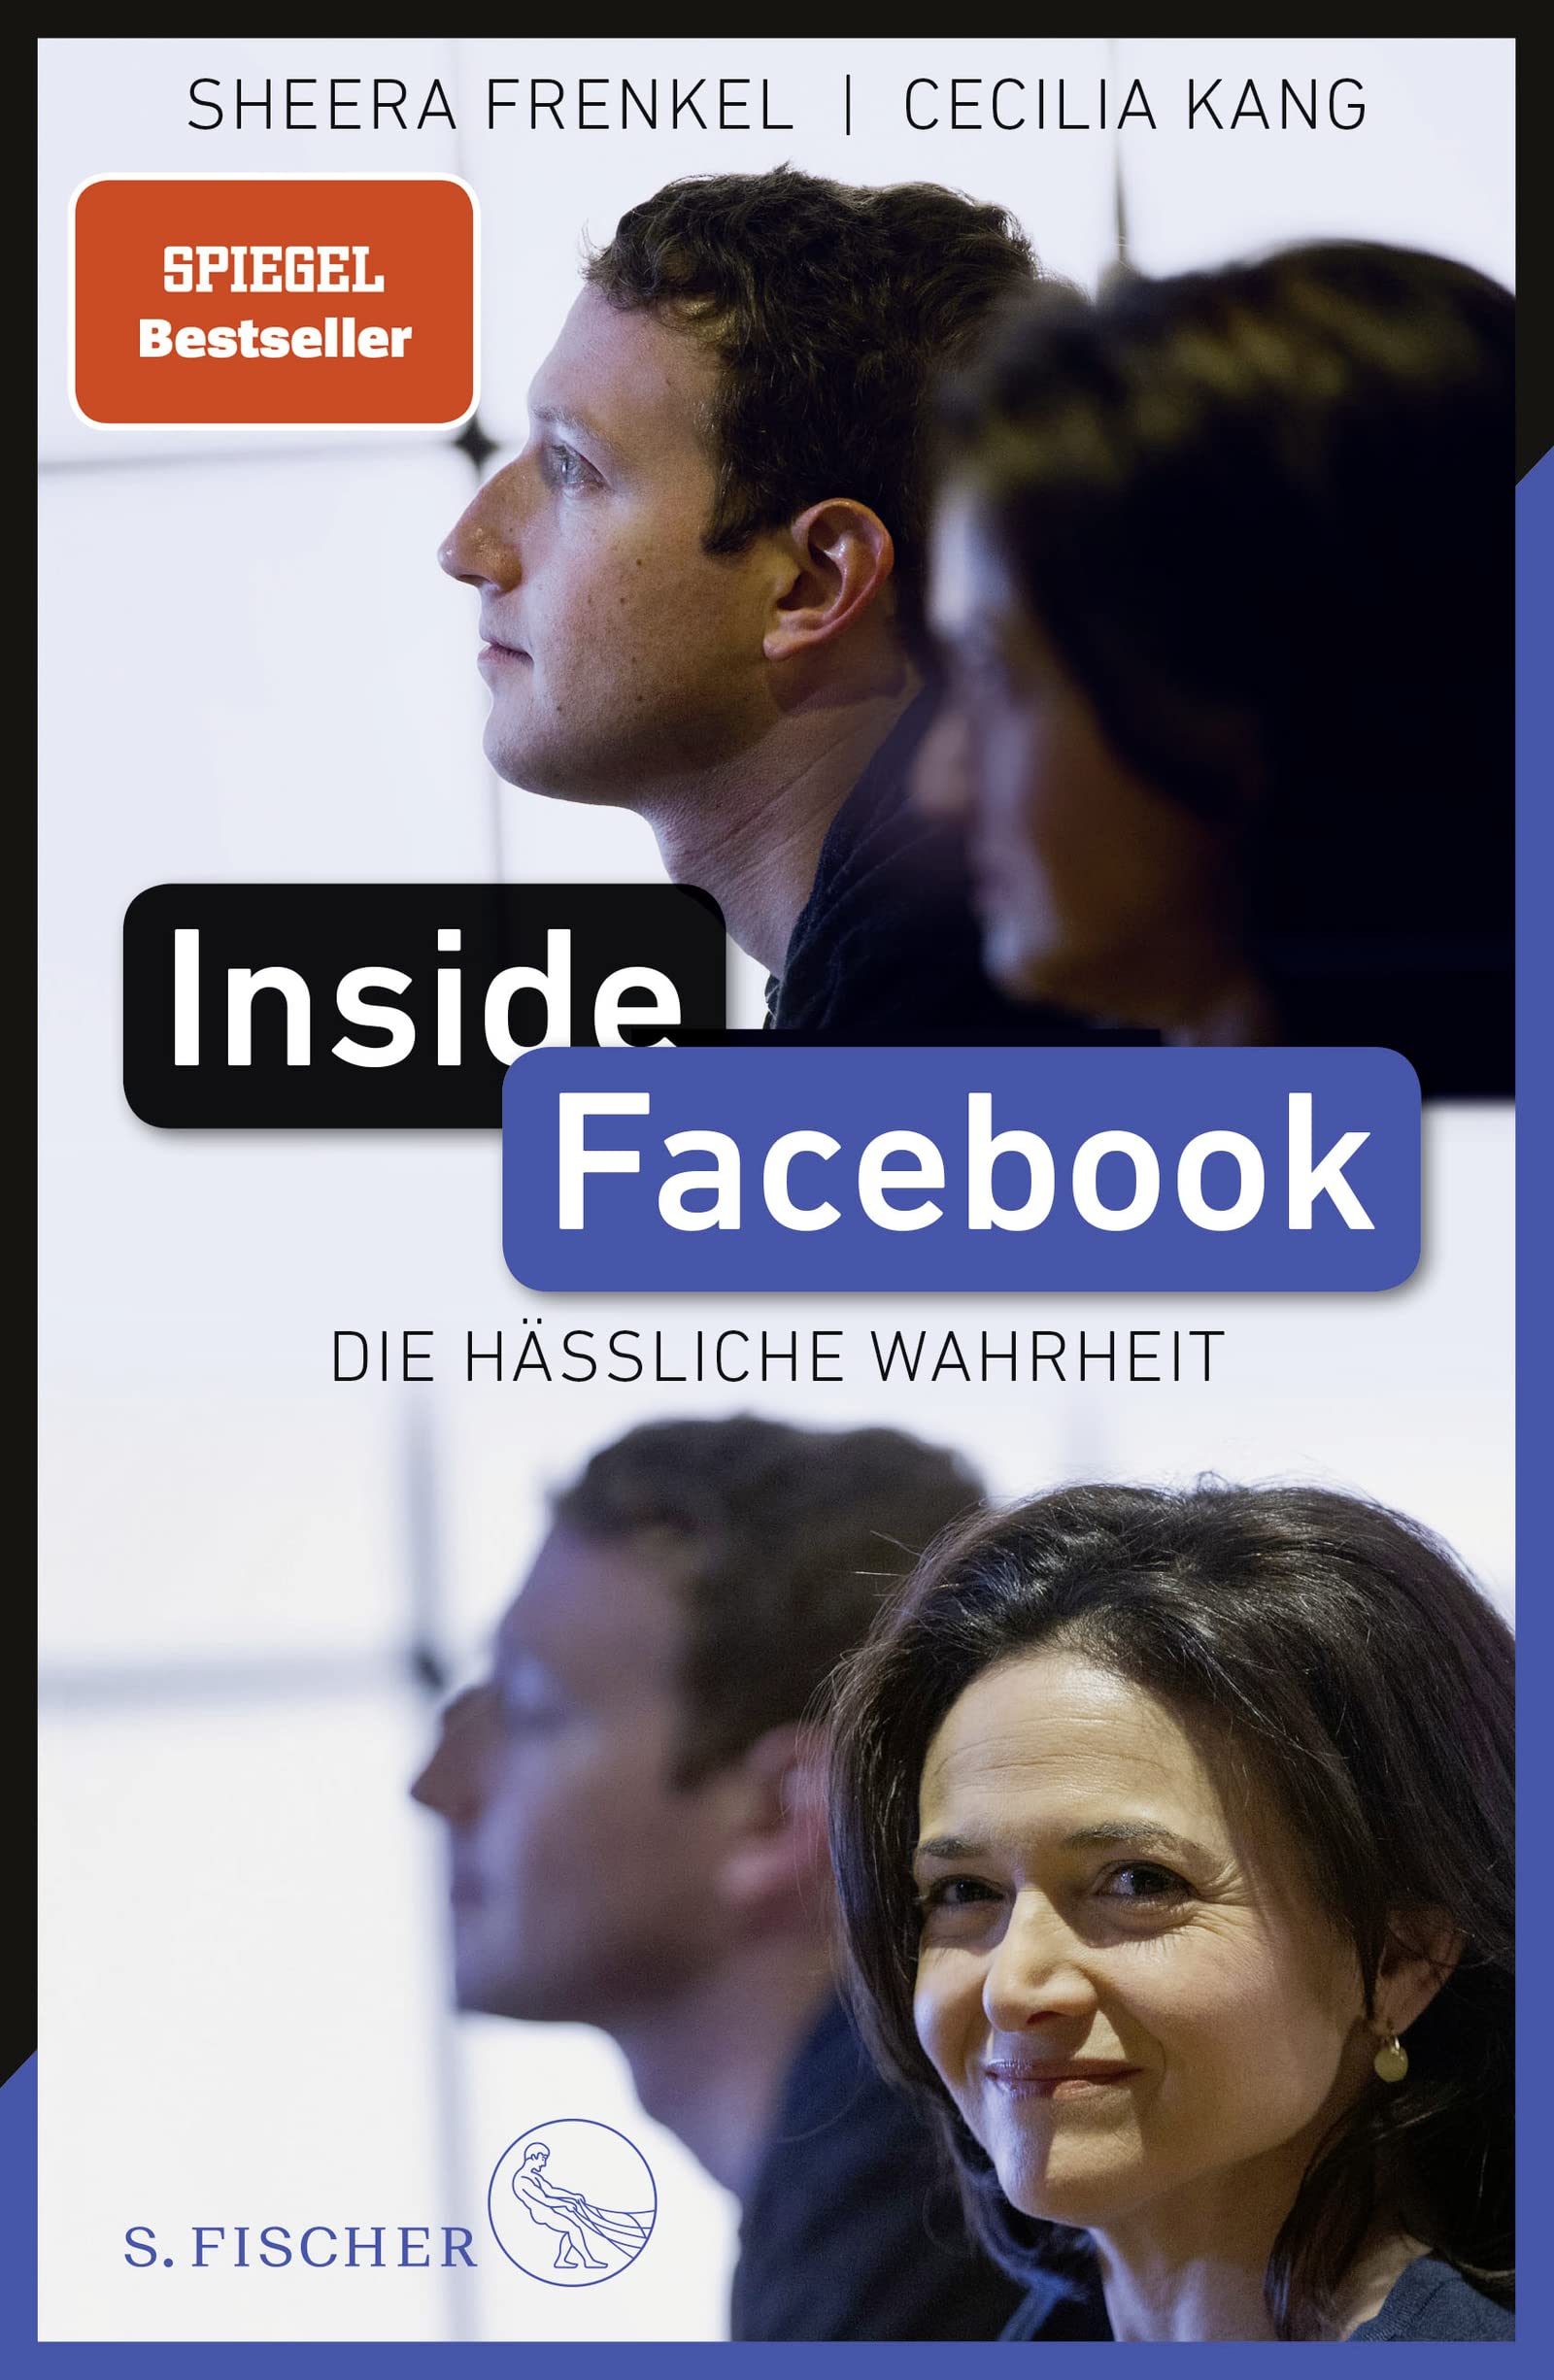 Buchcover: inside Facebook. Mark Zuckerberg und Sheryl Sandberg im Profil